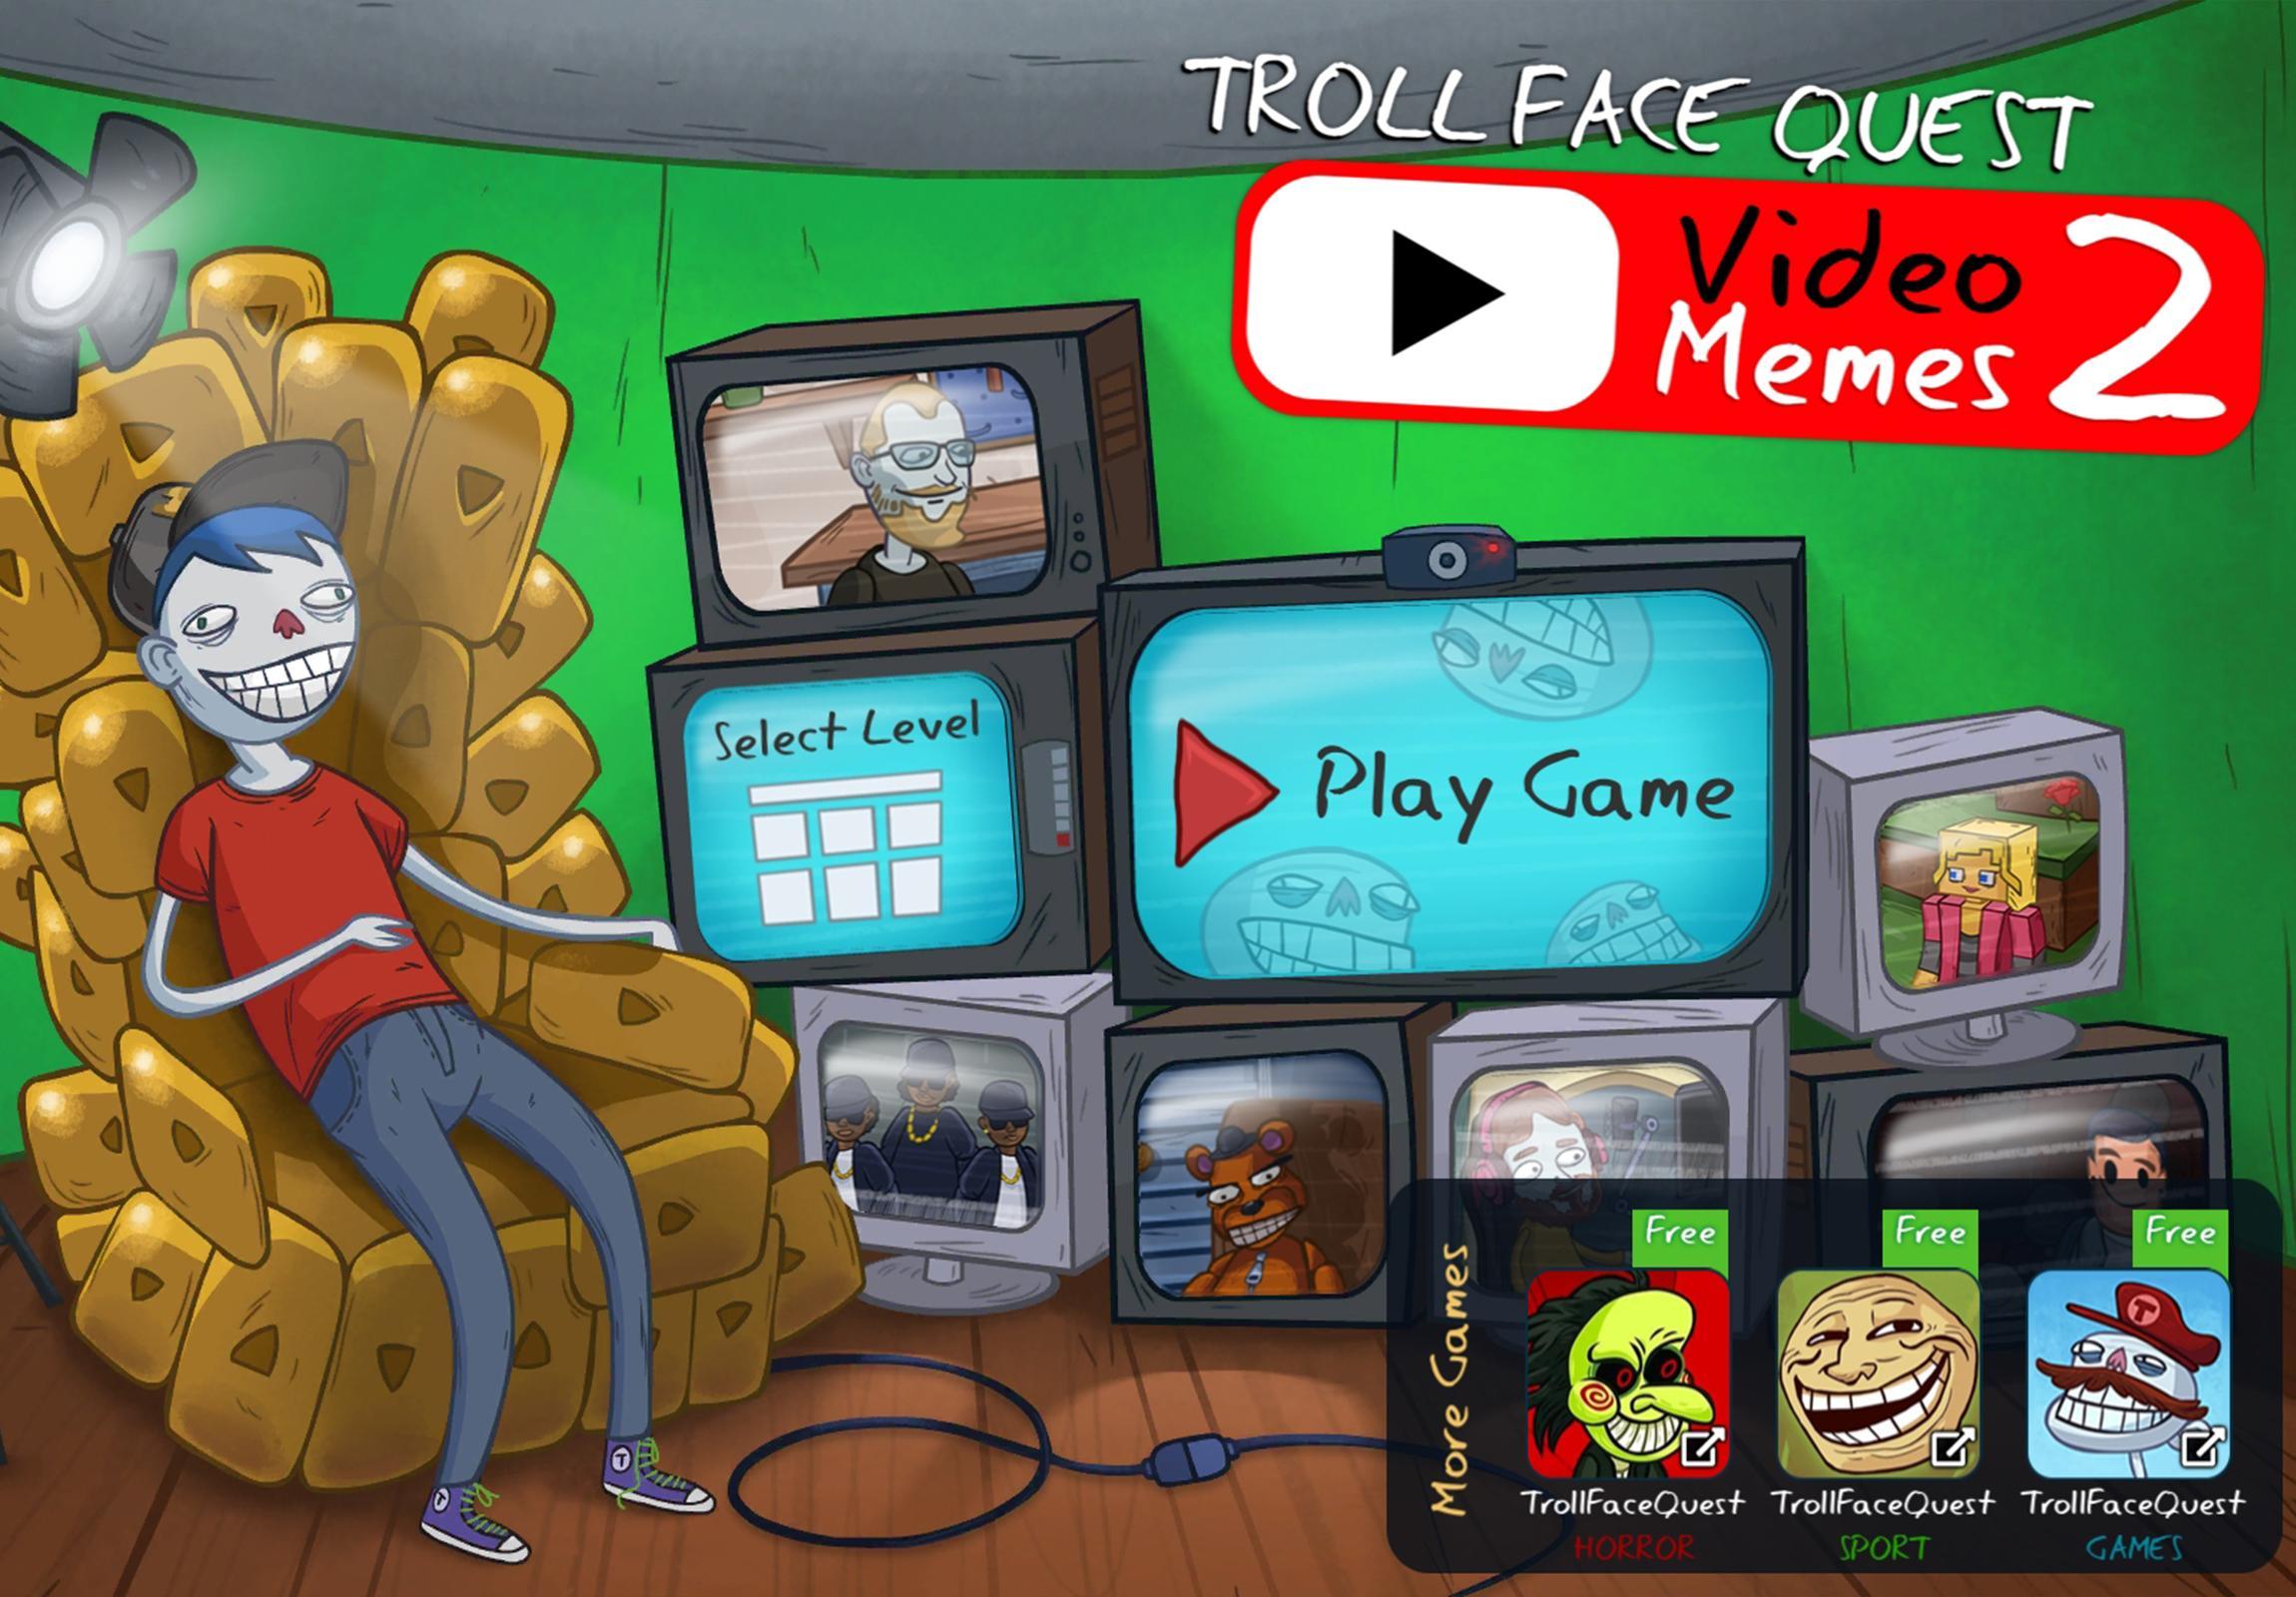 Trollface quest memes. Тролль квест. Троллфейс игра. Troll Quest Video games. Тролль фейс квест.